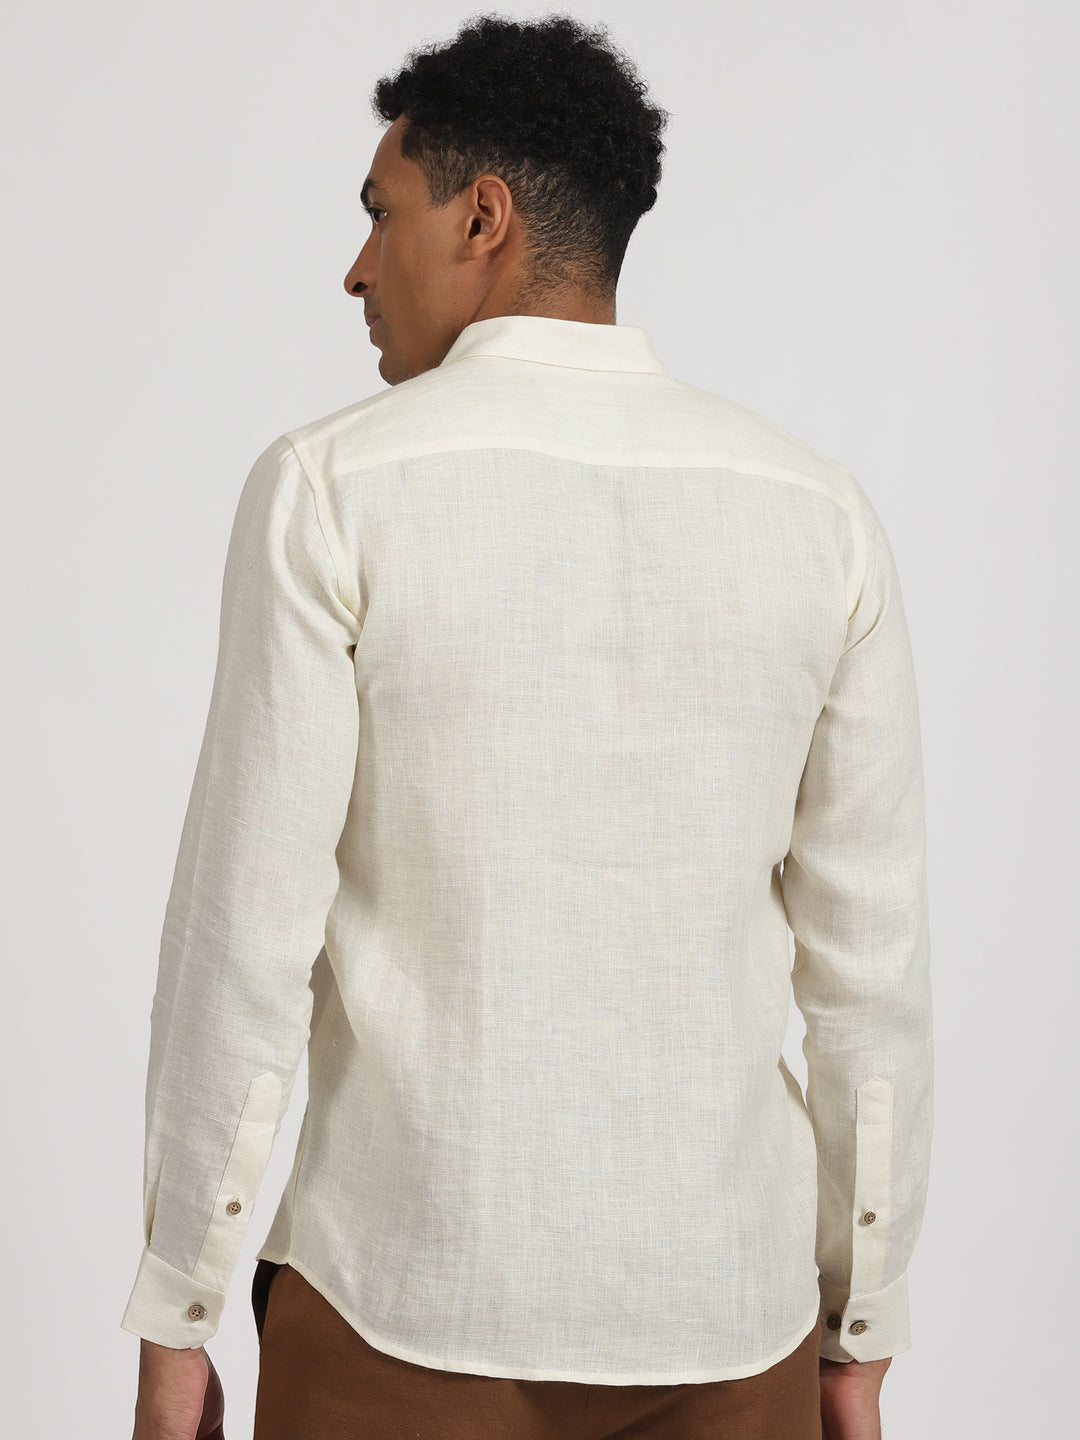 Mason - Pure Linen Hand Embroidered Full Sleeve Shirt - Ivory